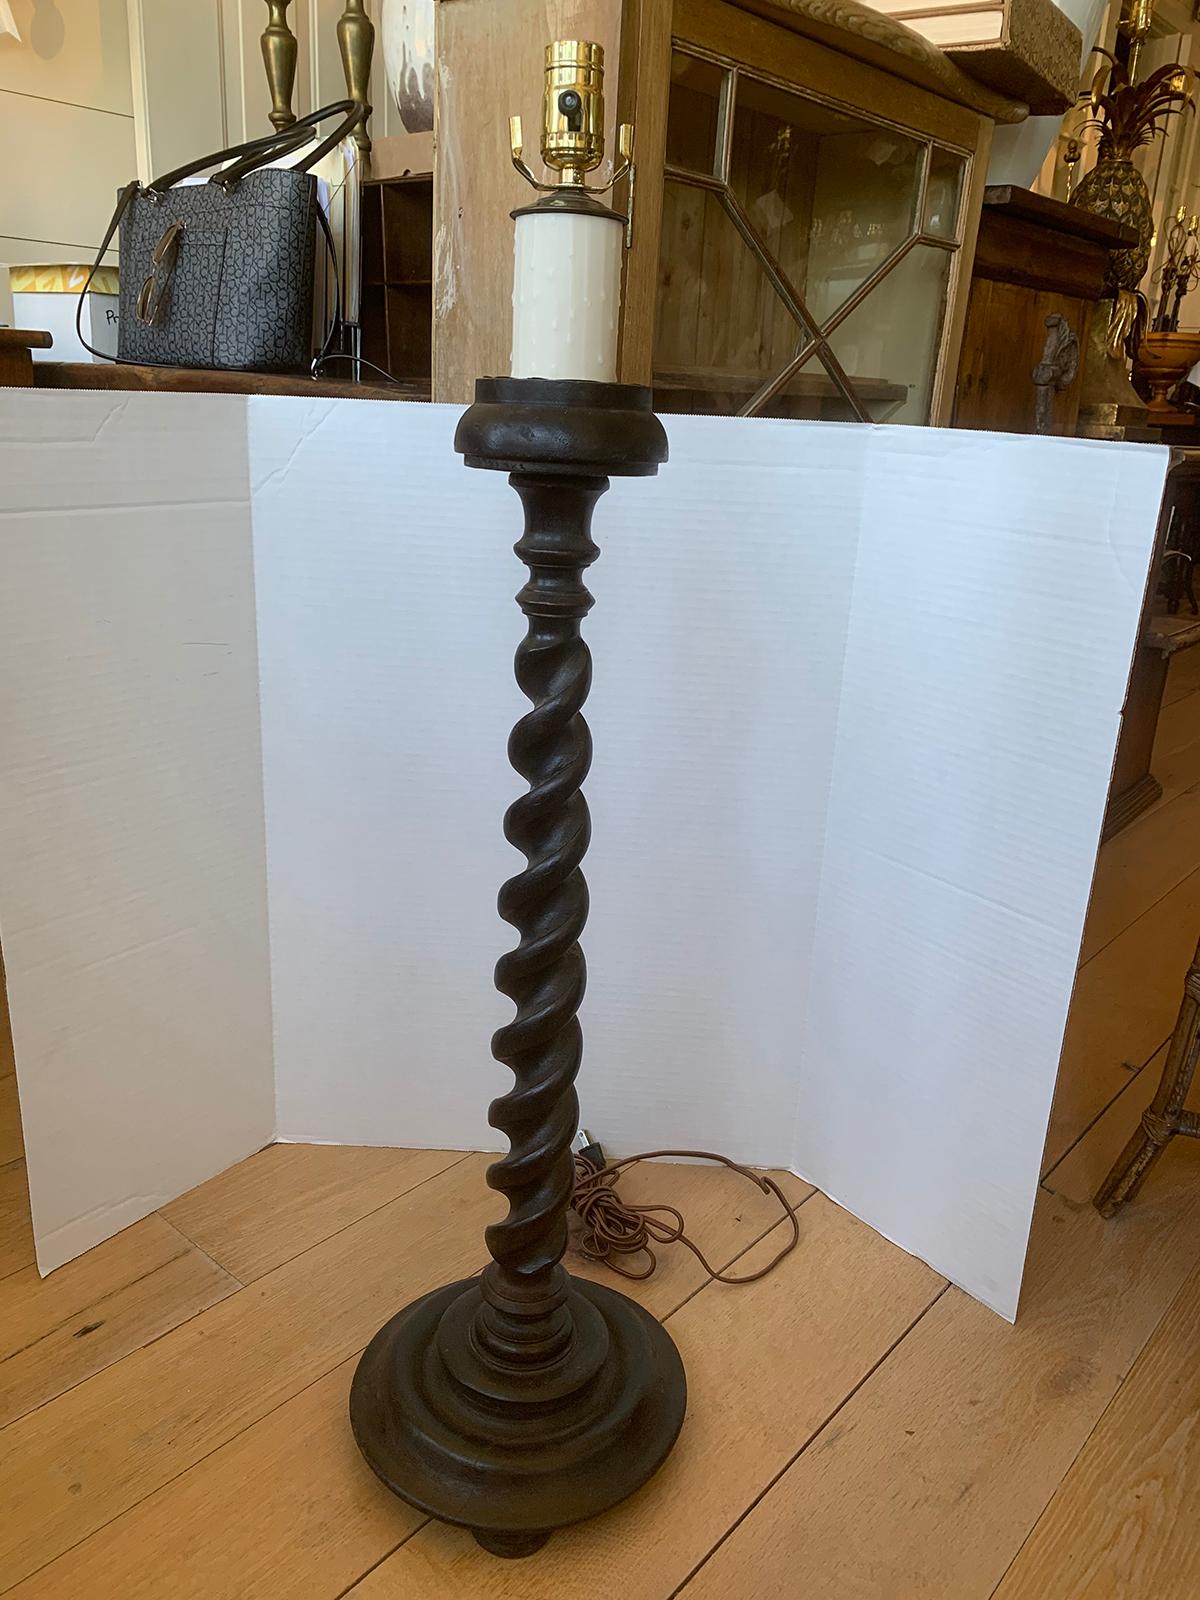 Large scale 20th century ebonized barley twist candlestick lamp
New wiring.